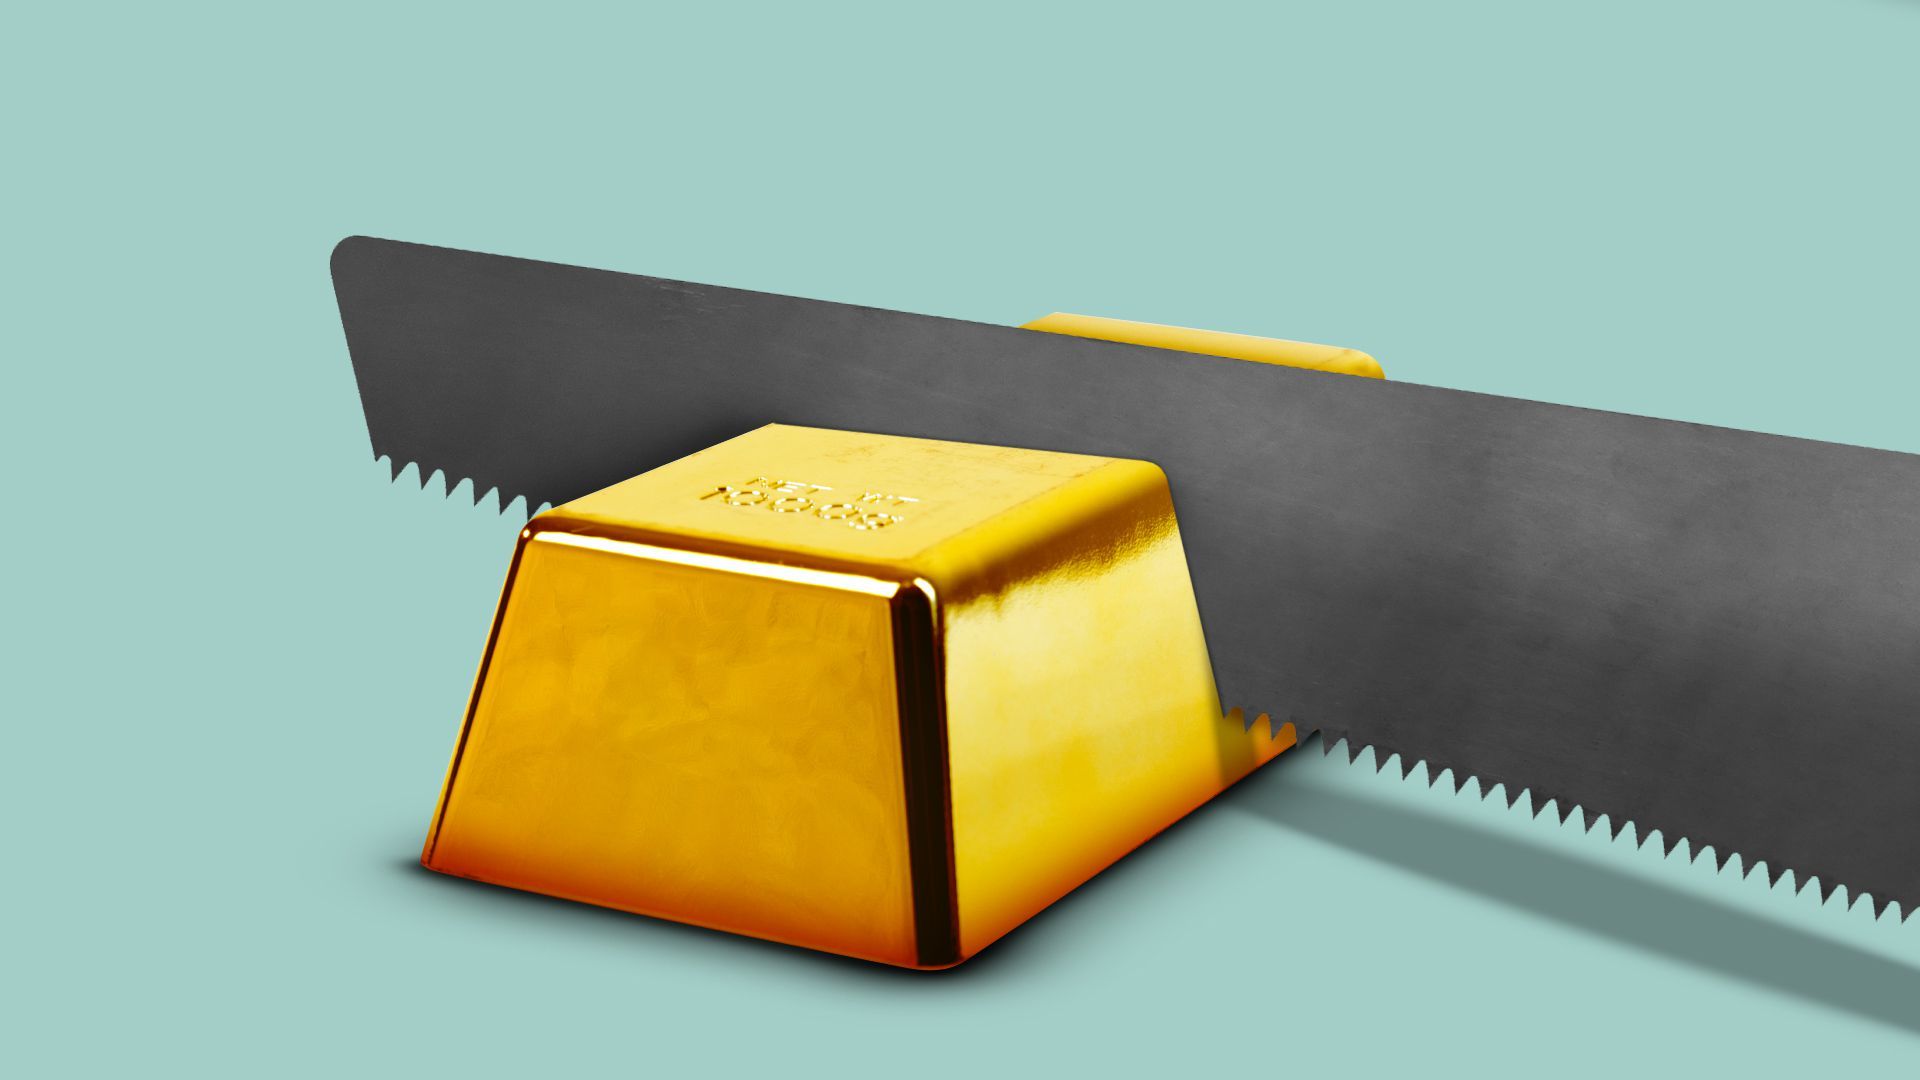 Illustration of a saw cutting a gold bar. 